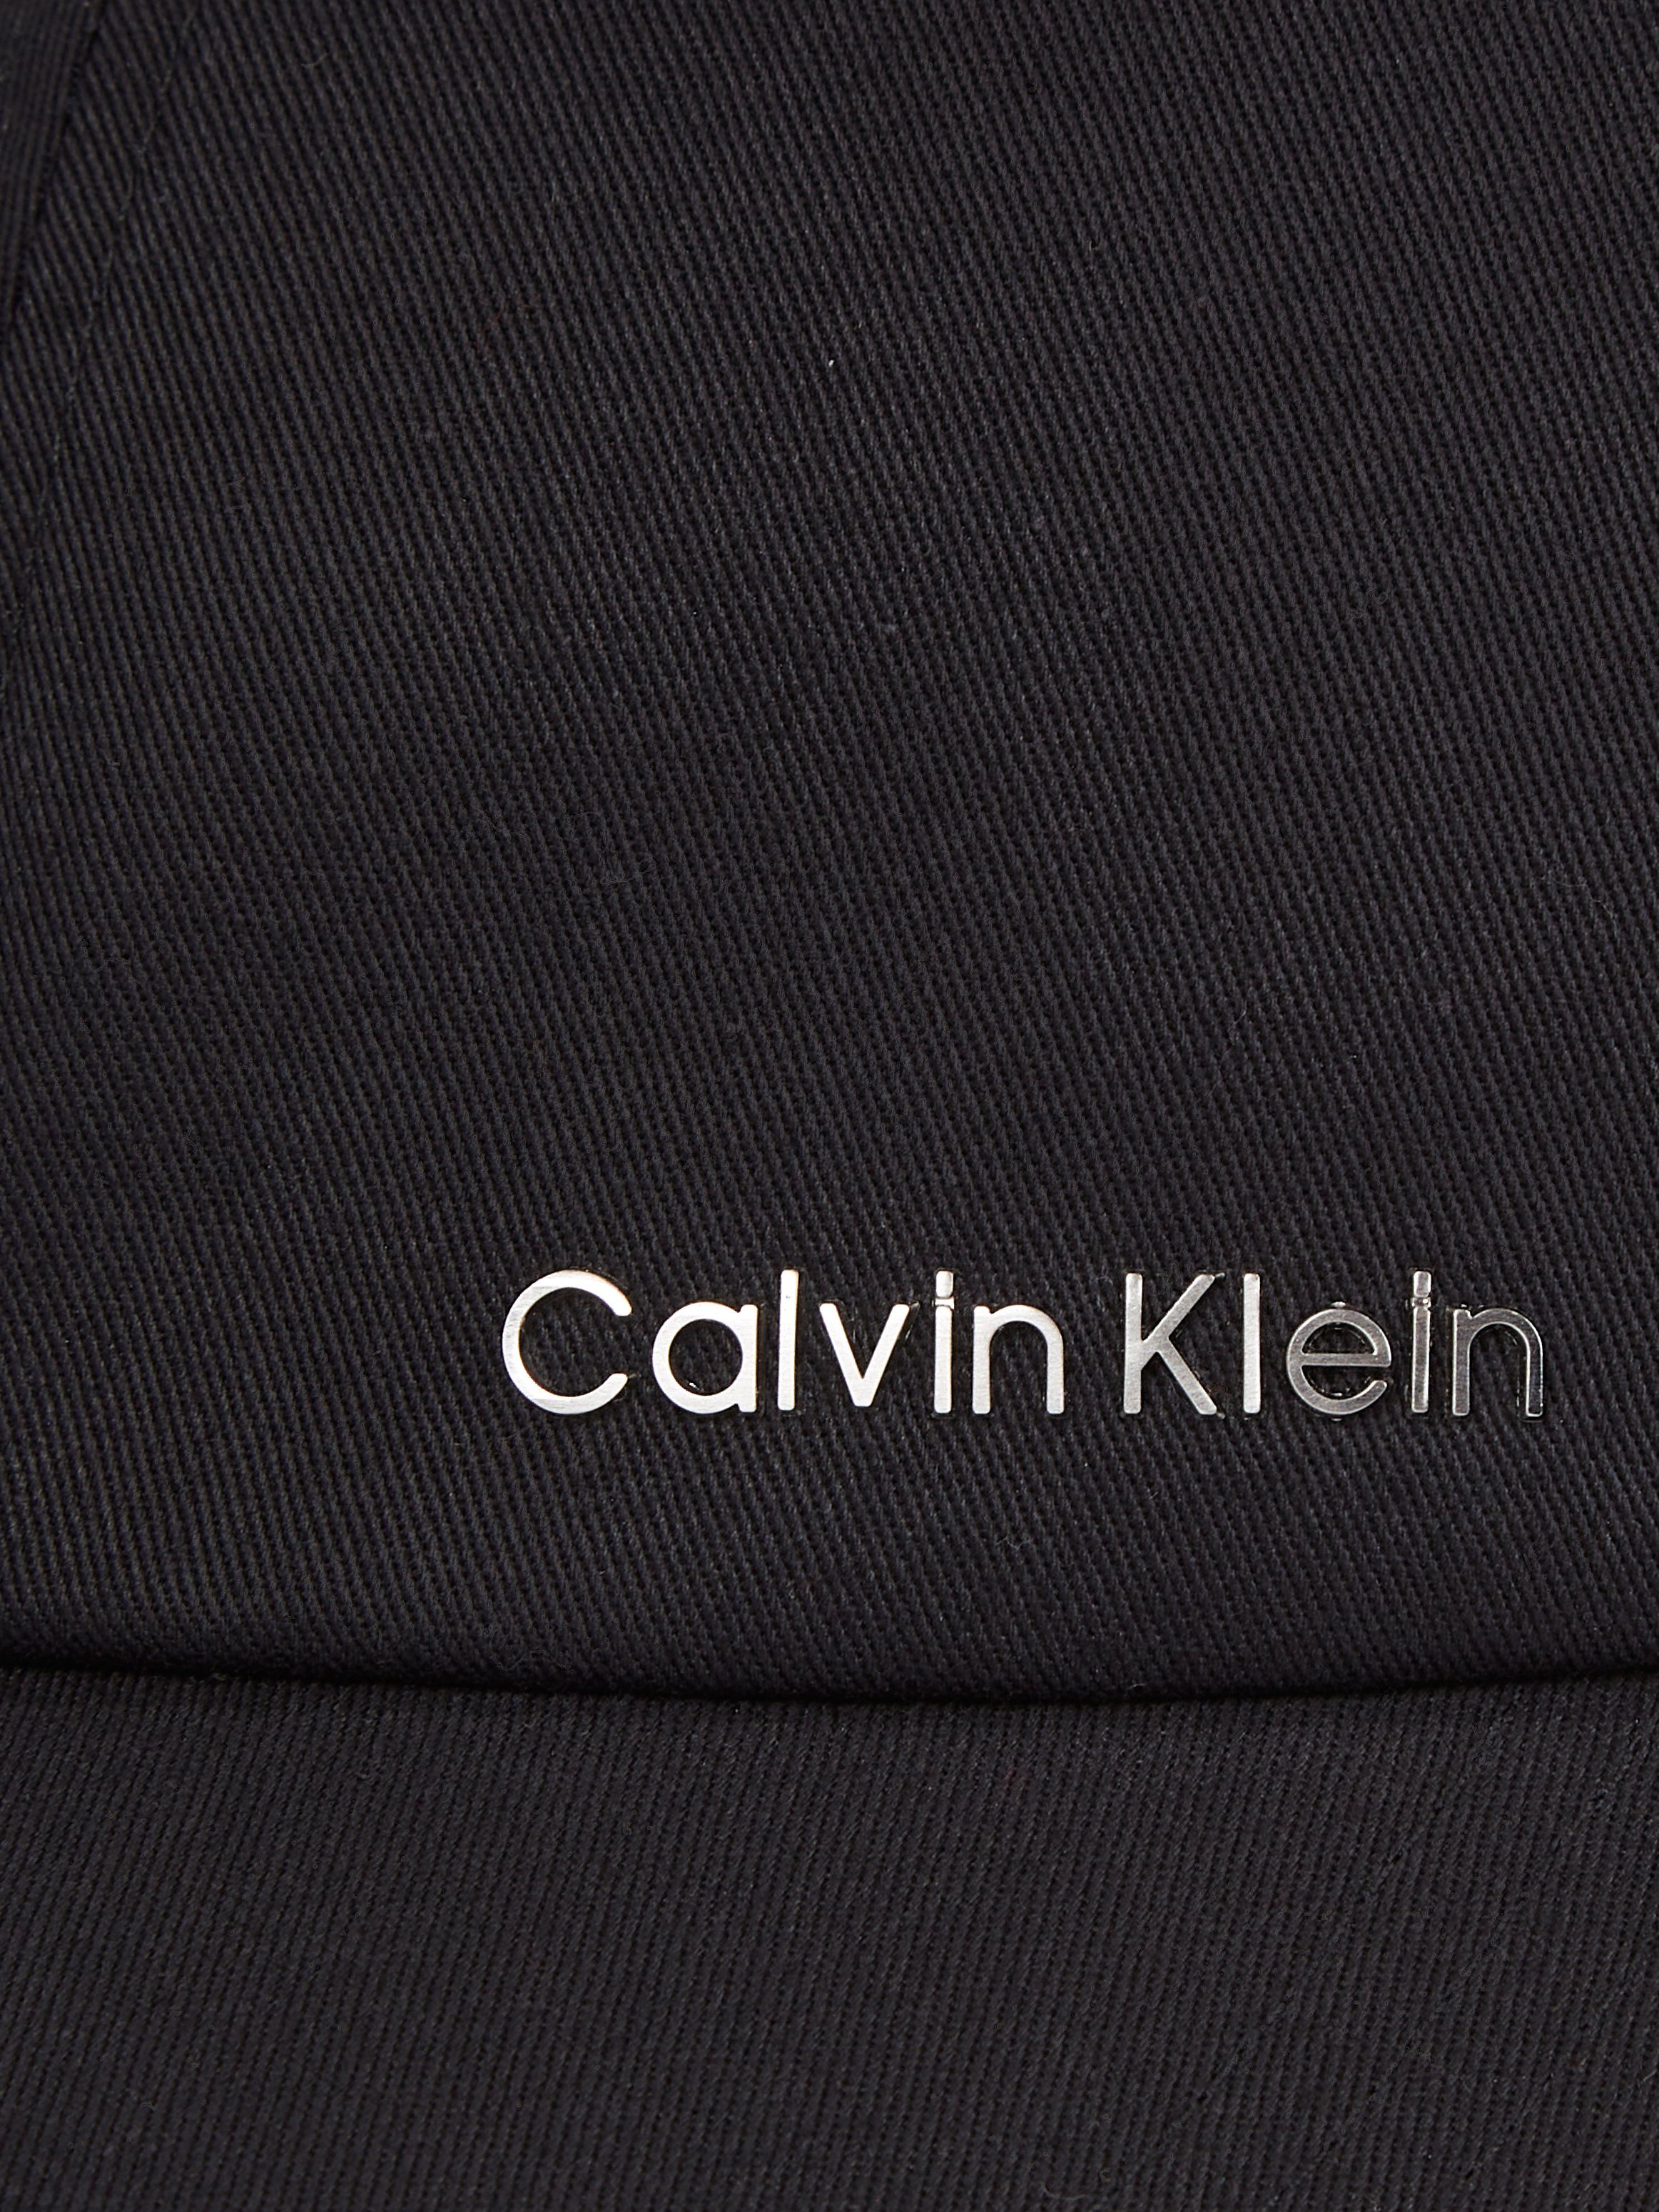 Cap Klein Baseball CAP Calvin Black METAL BB Ck LETTERING